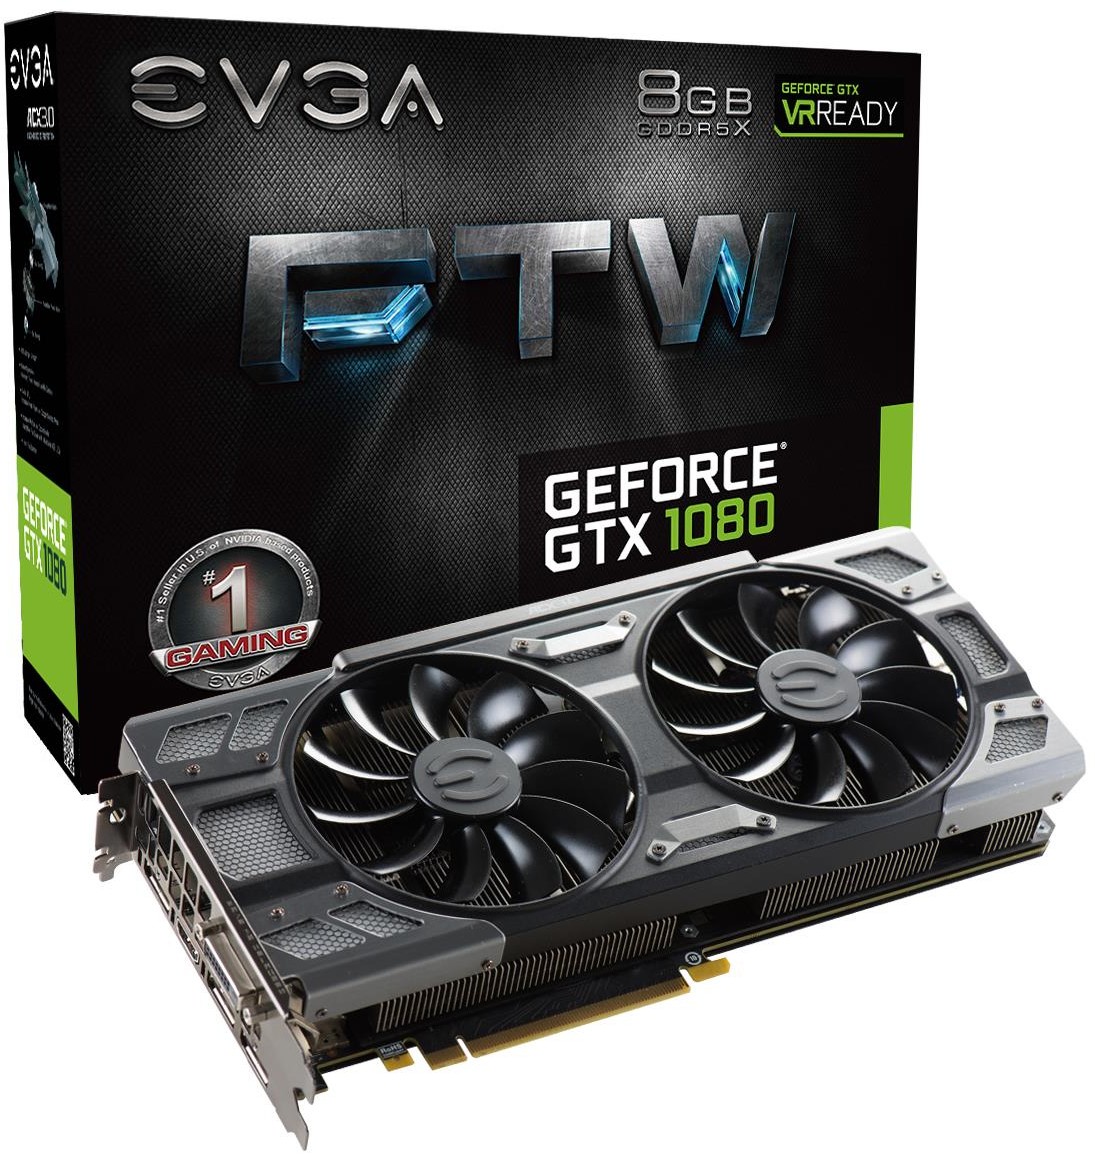 EVGA GeForce GTX 1080 FTW Gaming ACX VR Ready (08G-P4-6286-KR)